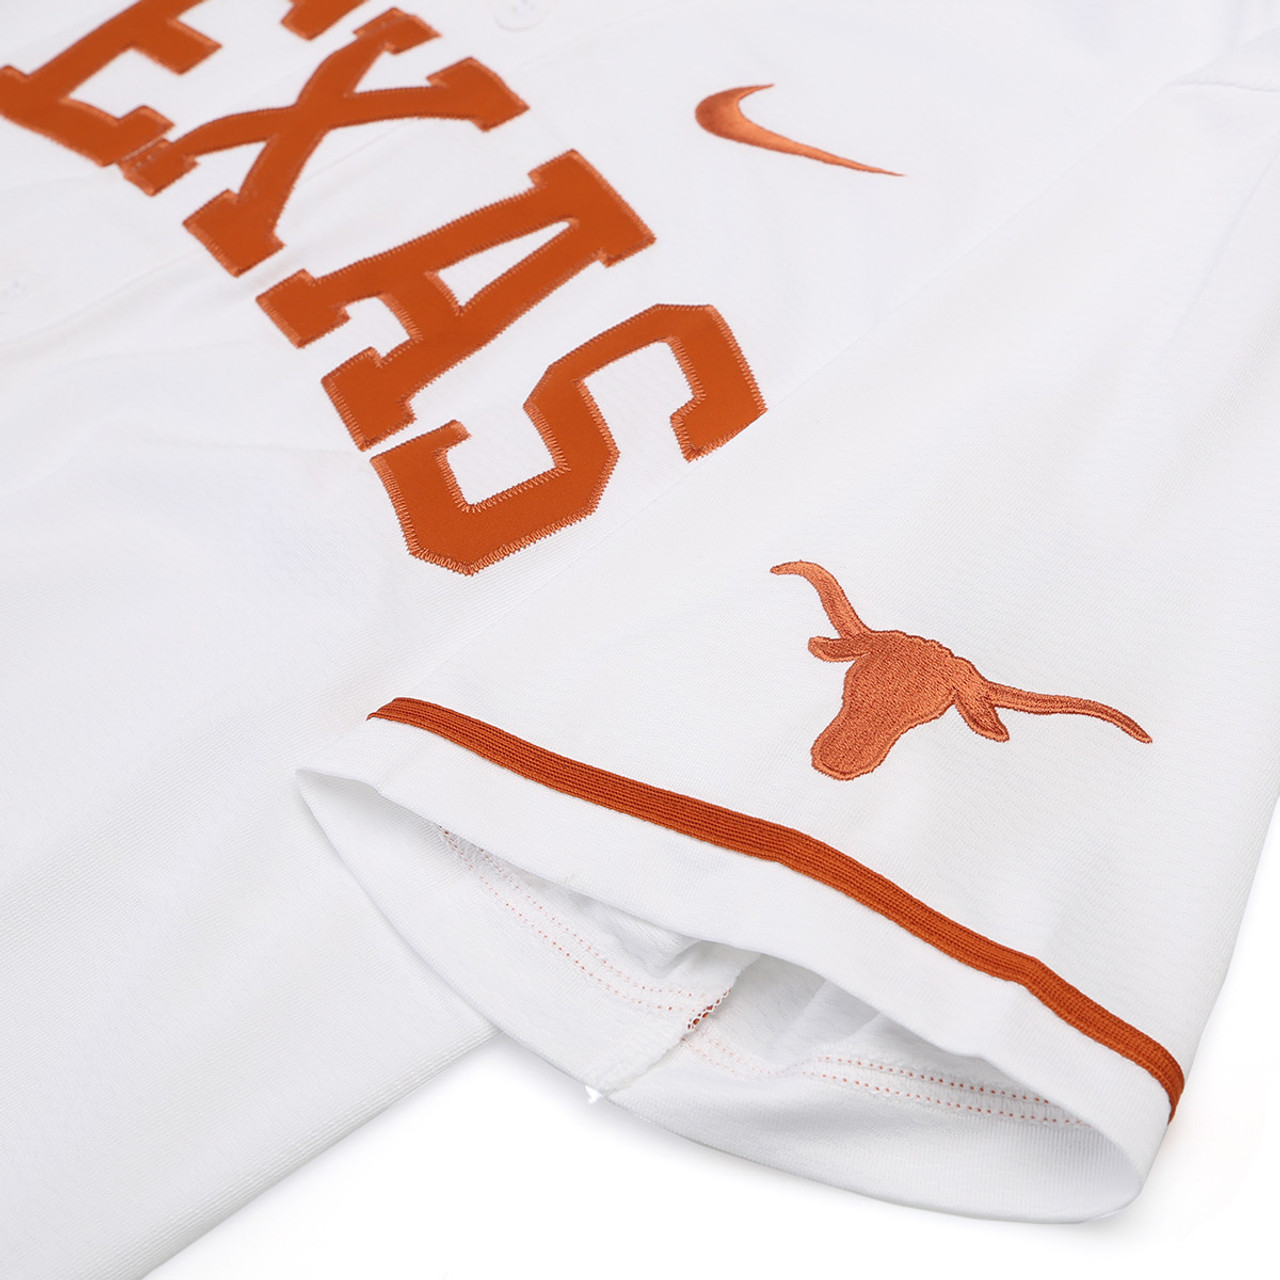 Nike Texas Longhorns Longhorns Baseball Jersey